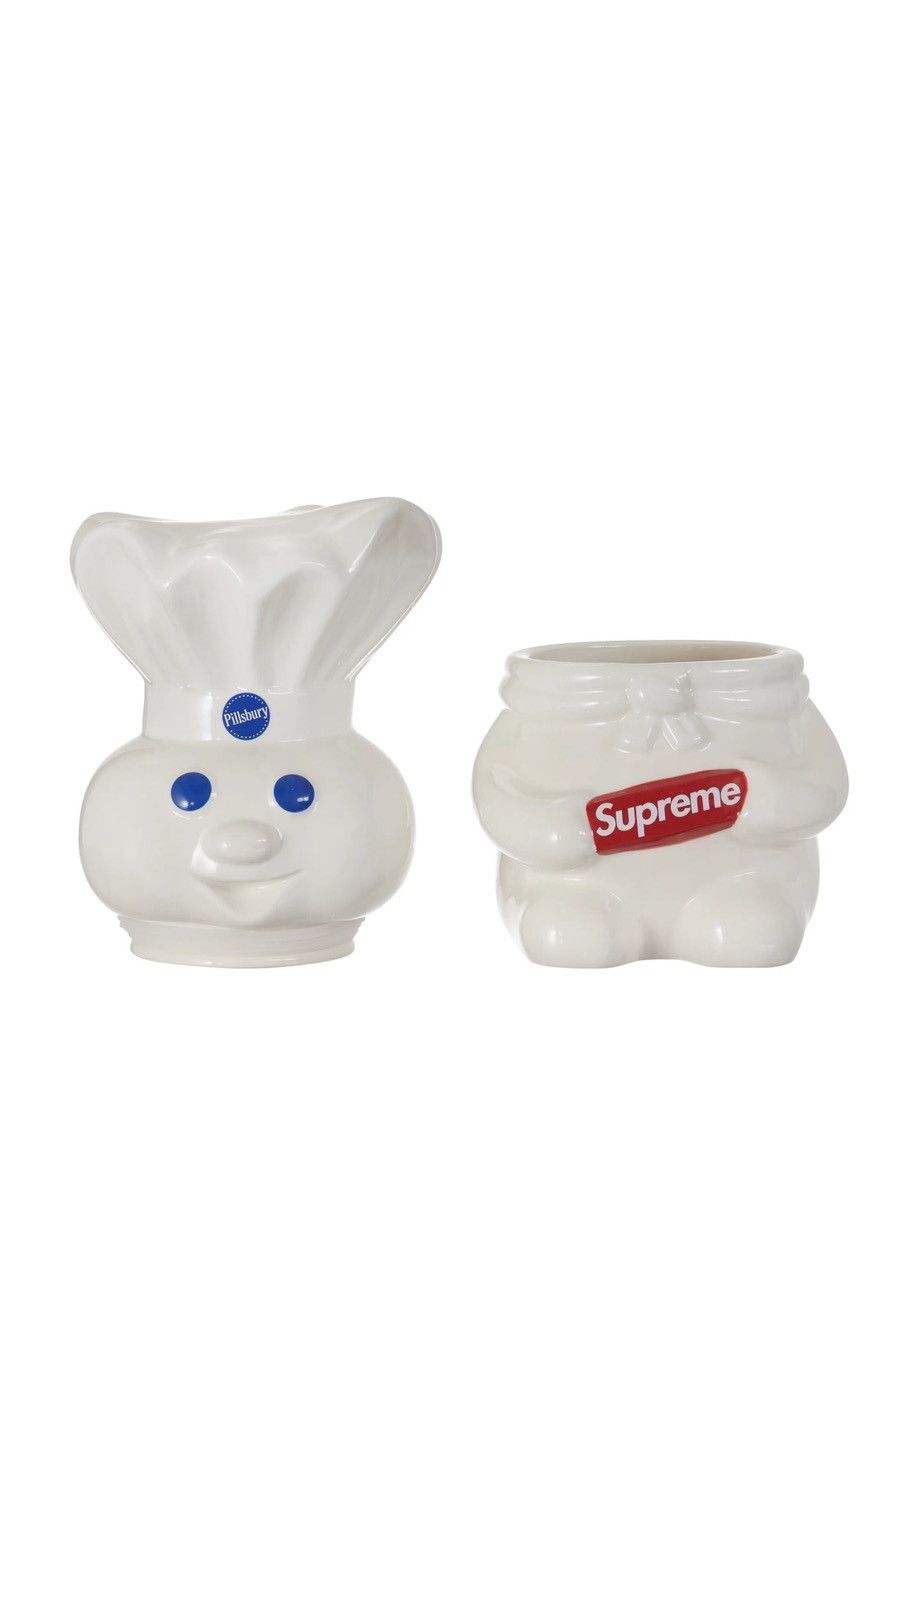 Supreme Supreme doughboy cookie jar pillsbury, yung lean | Grailed